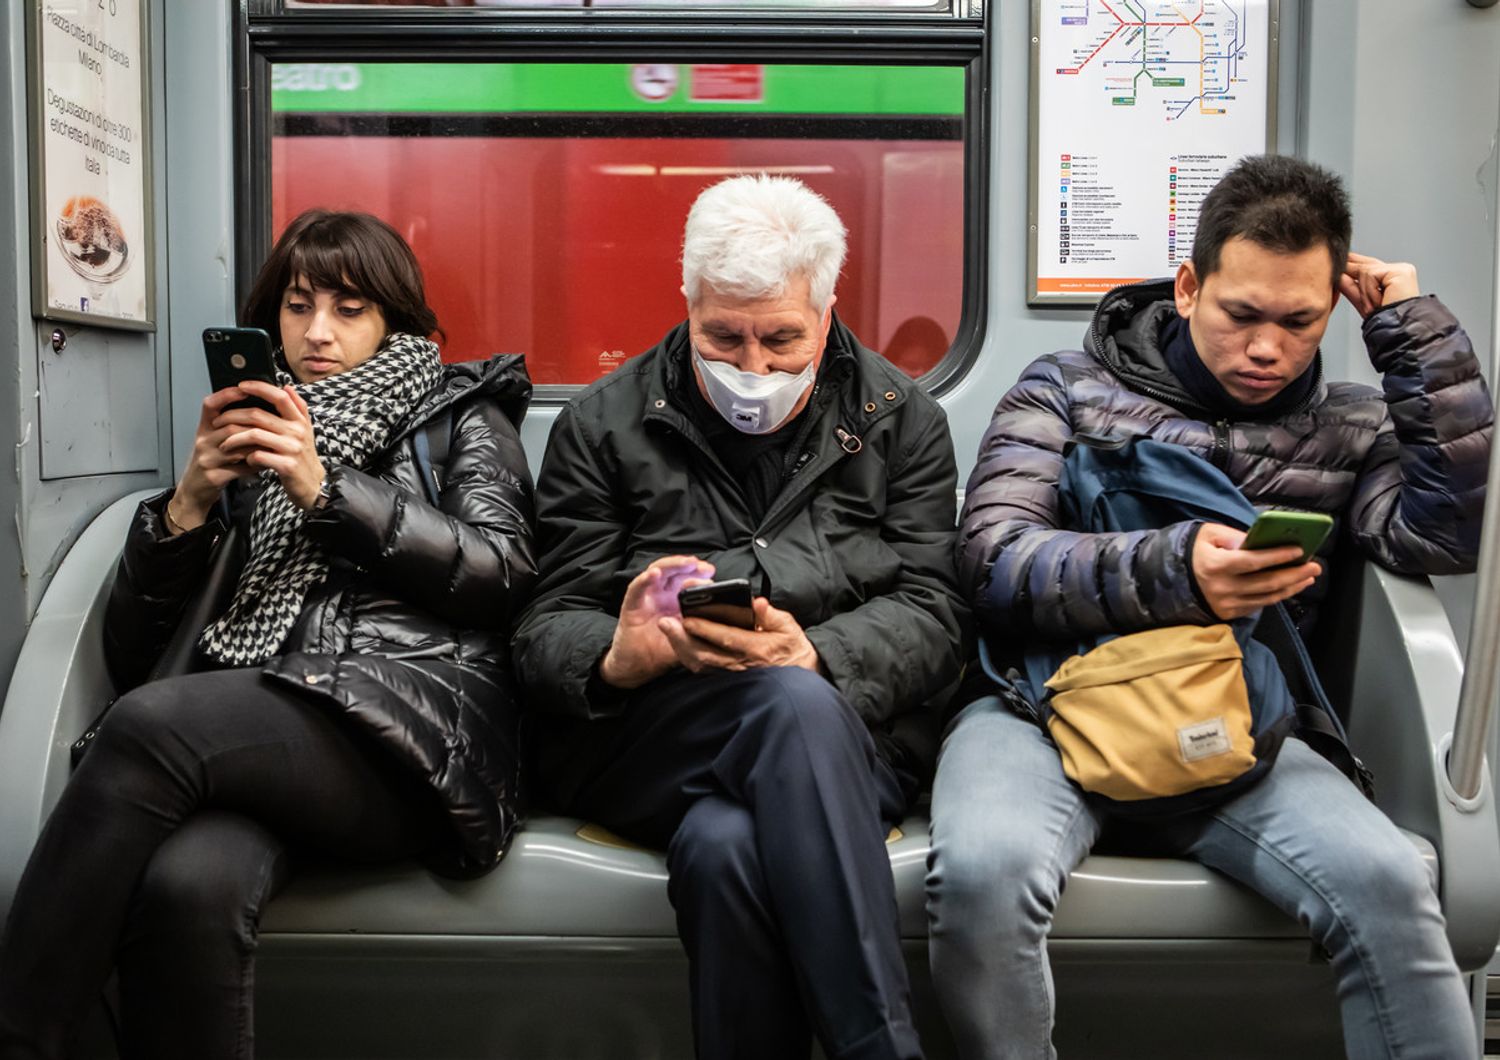 Emergenza Coronavirus: persone con mascherine nella metropolitana di Milano&nbsp;